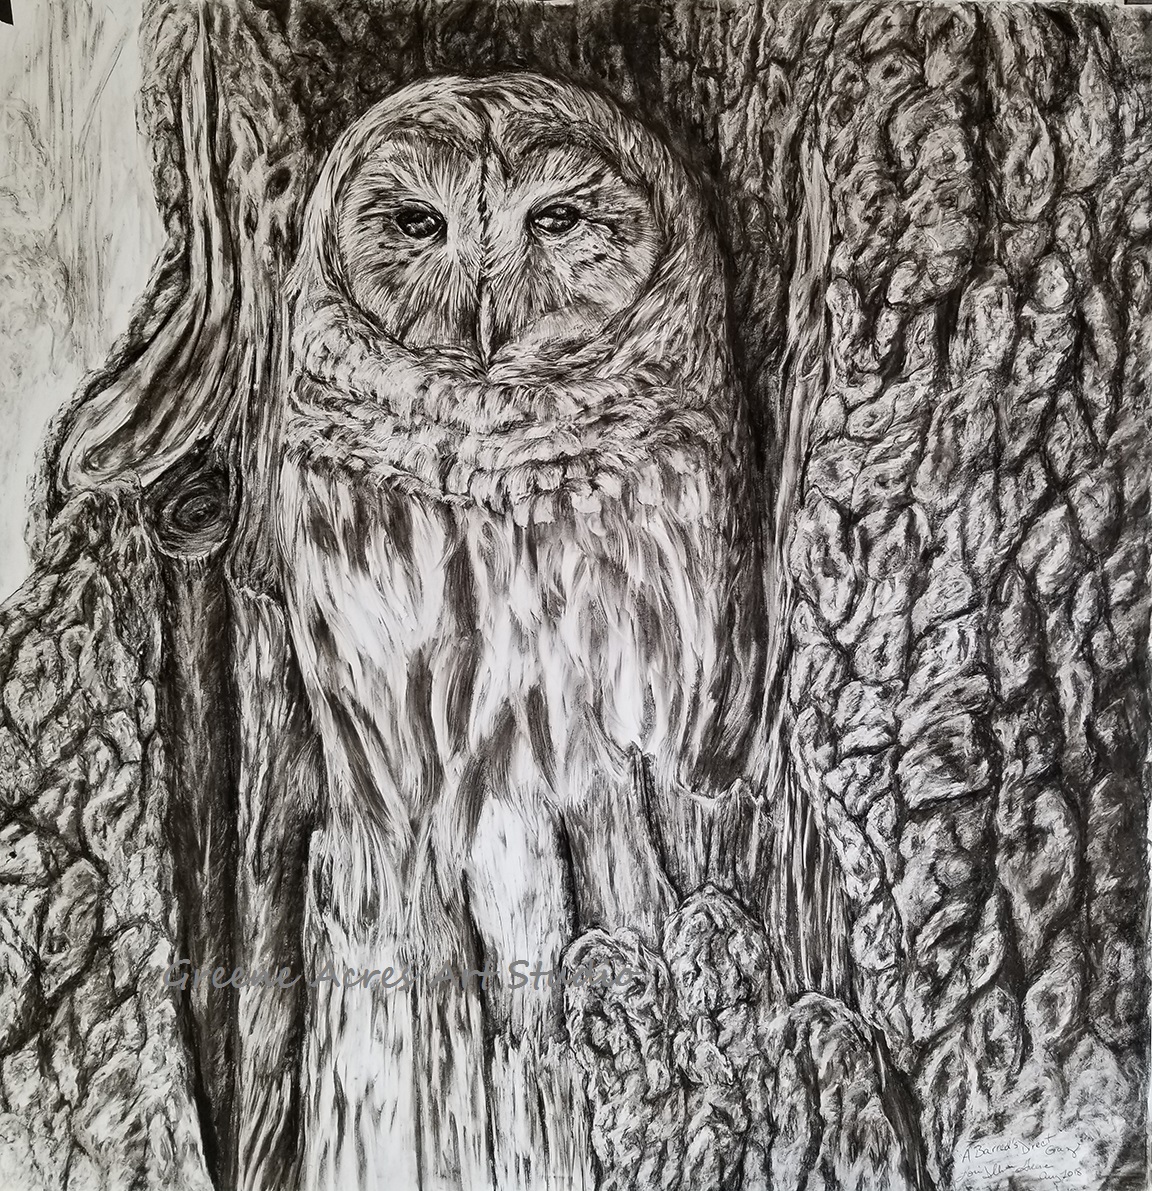 barred owl, animal portraiture, bird portraiture